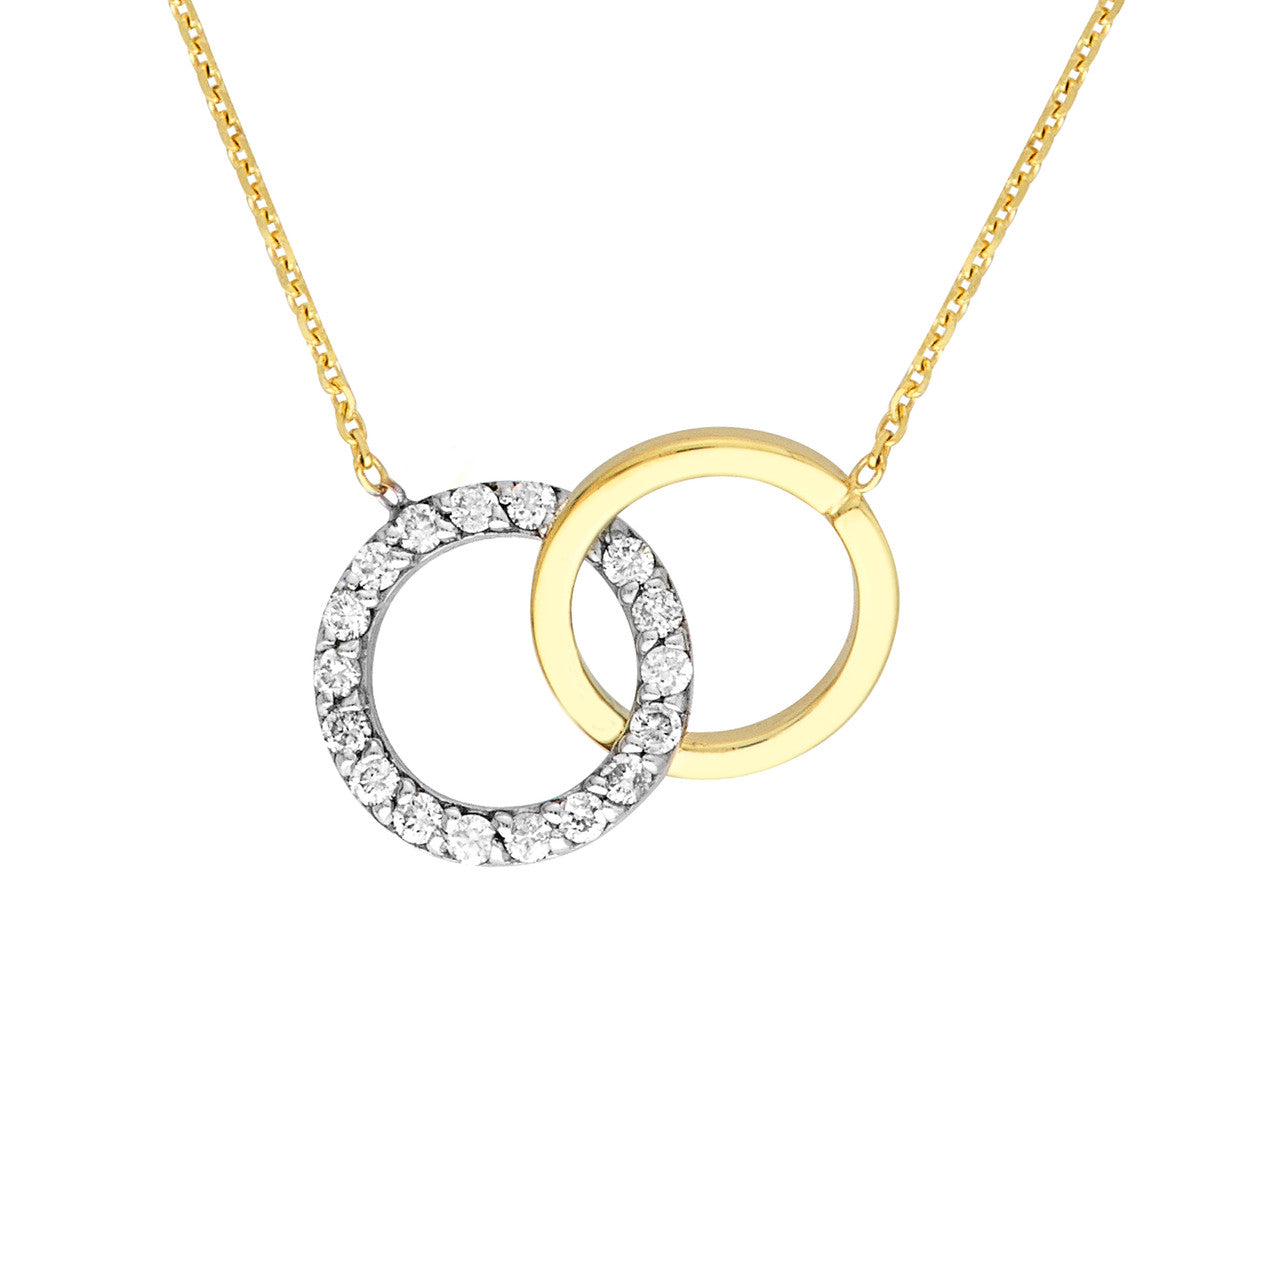 Intertwined Circle Pendant with Diamonds